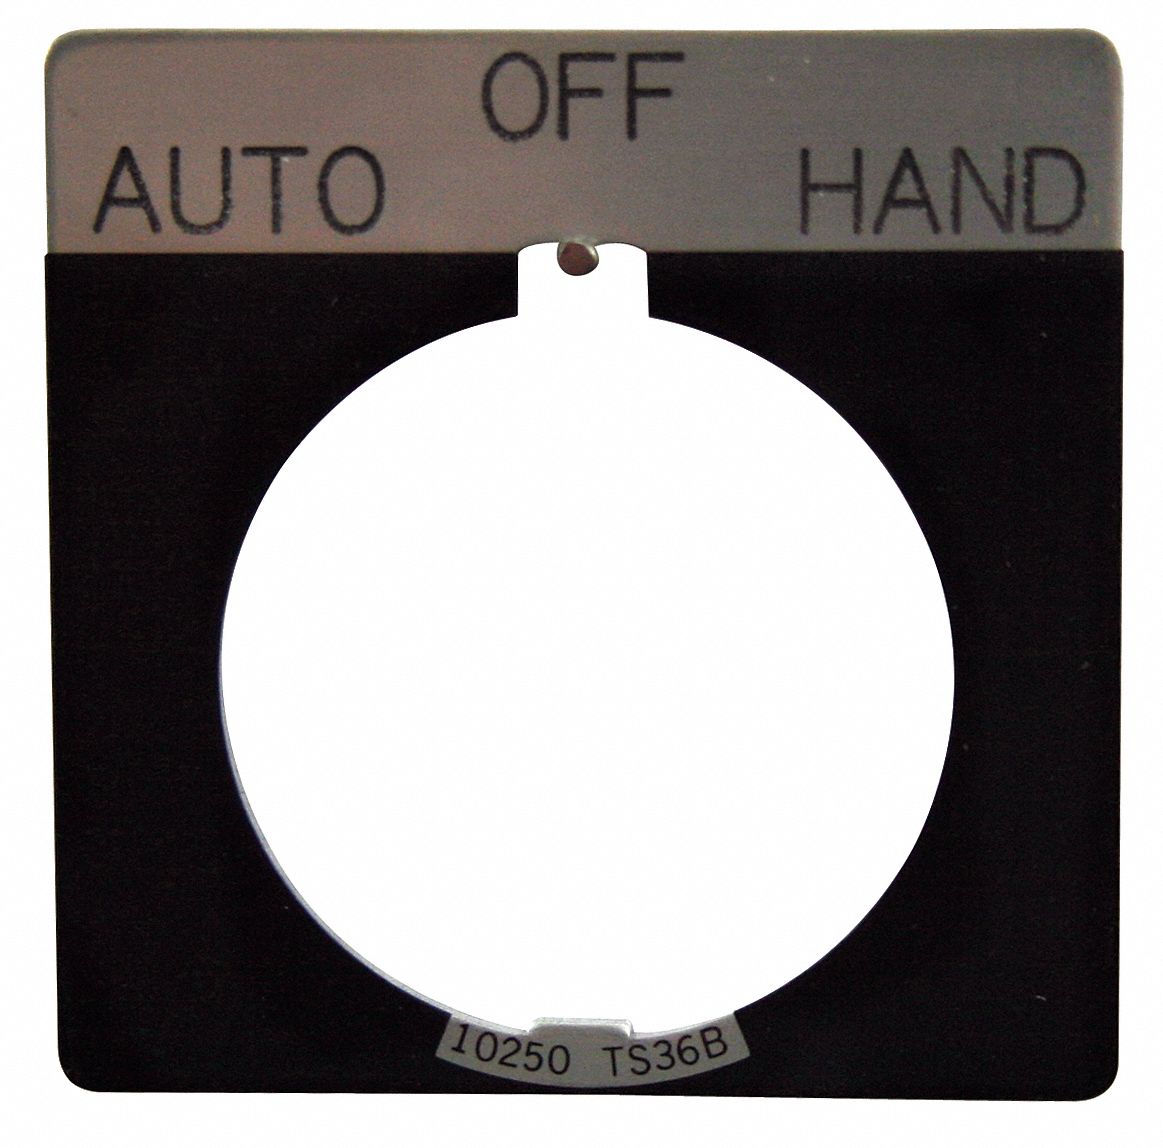 30mm Square Auto-Off-Hand Legend Plate, Aluminum, Black